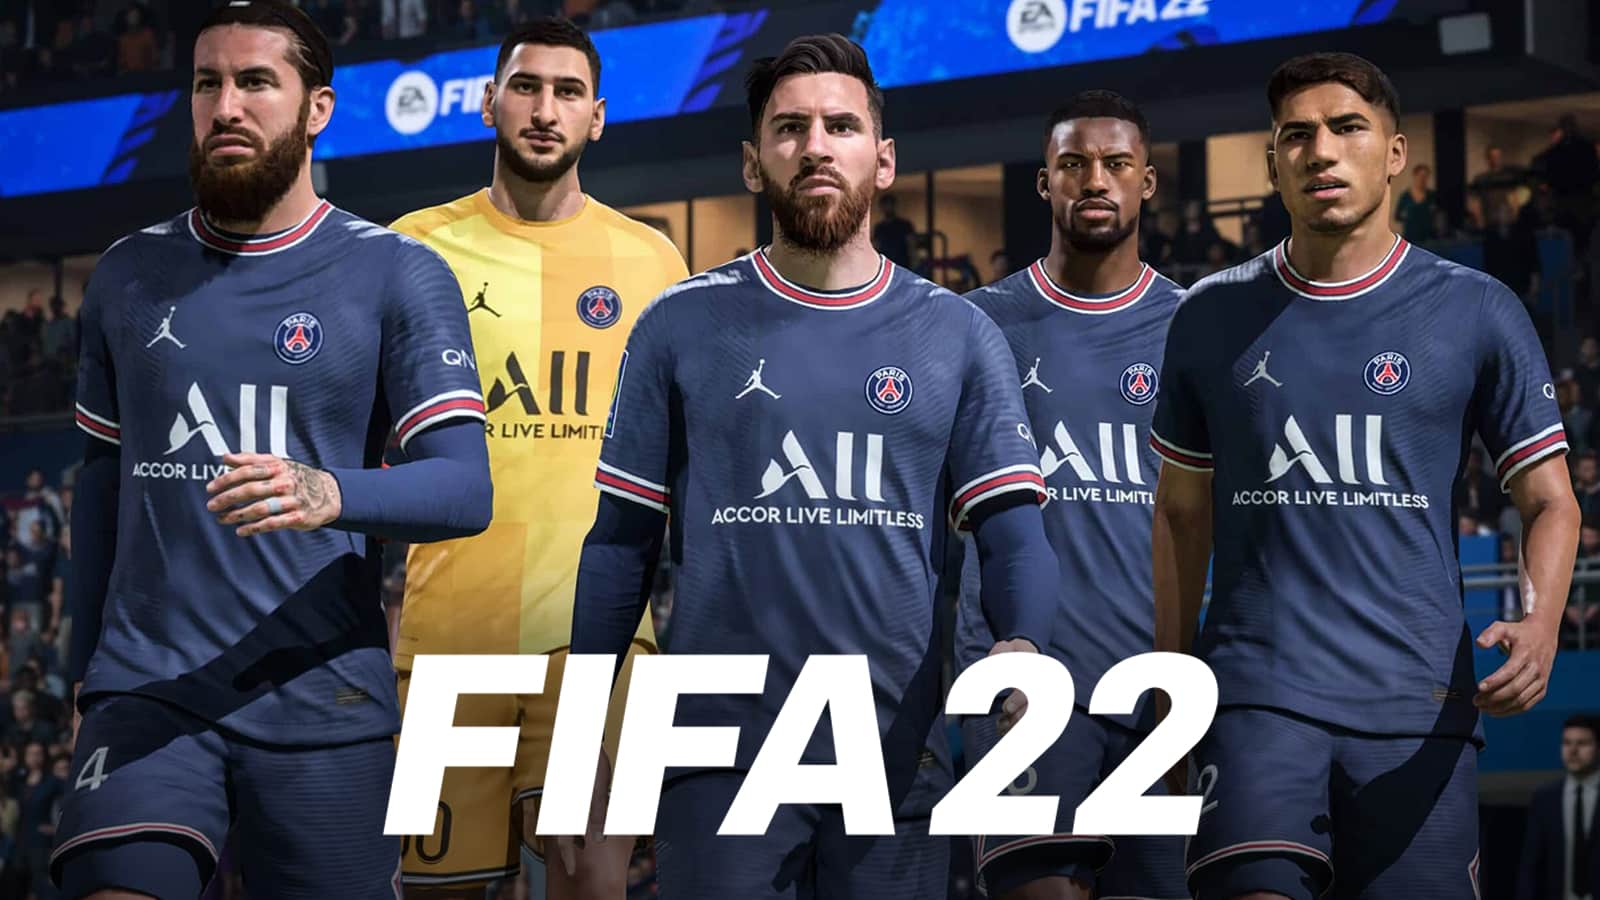 Fifa 22 release date